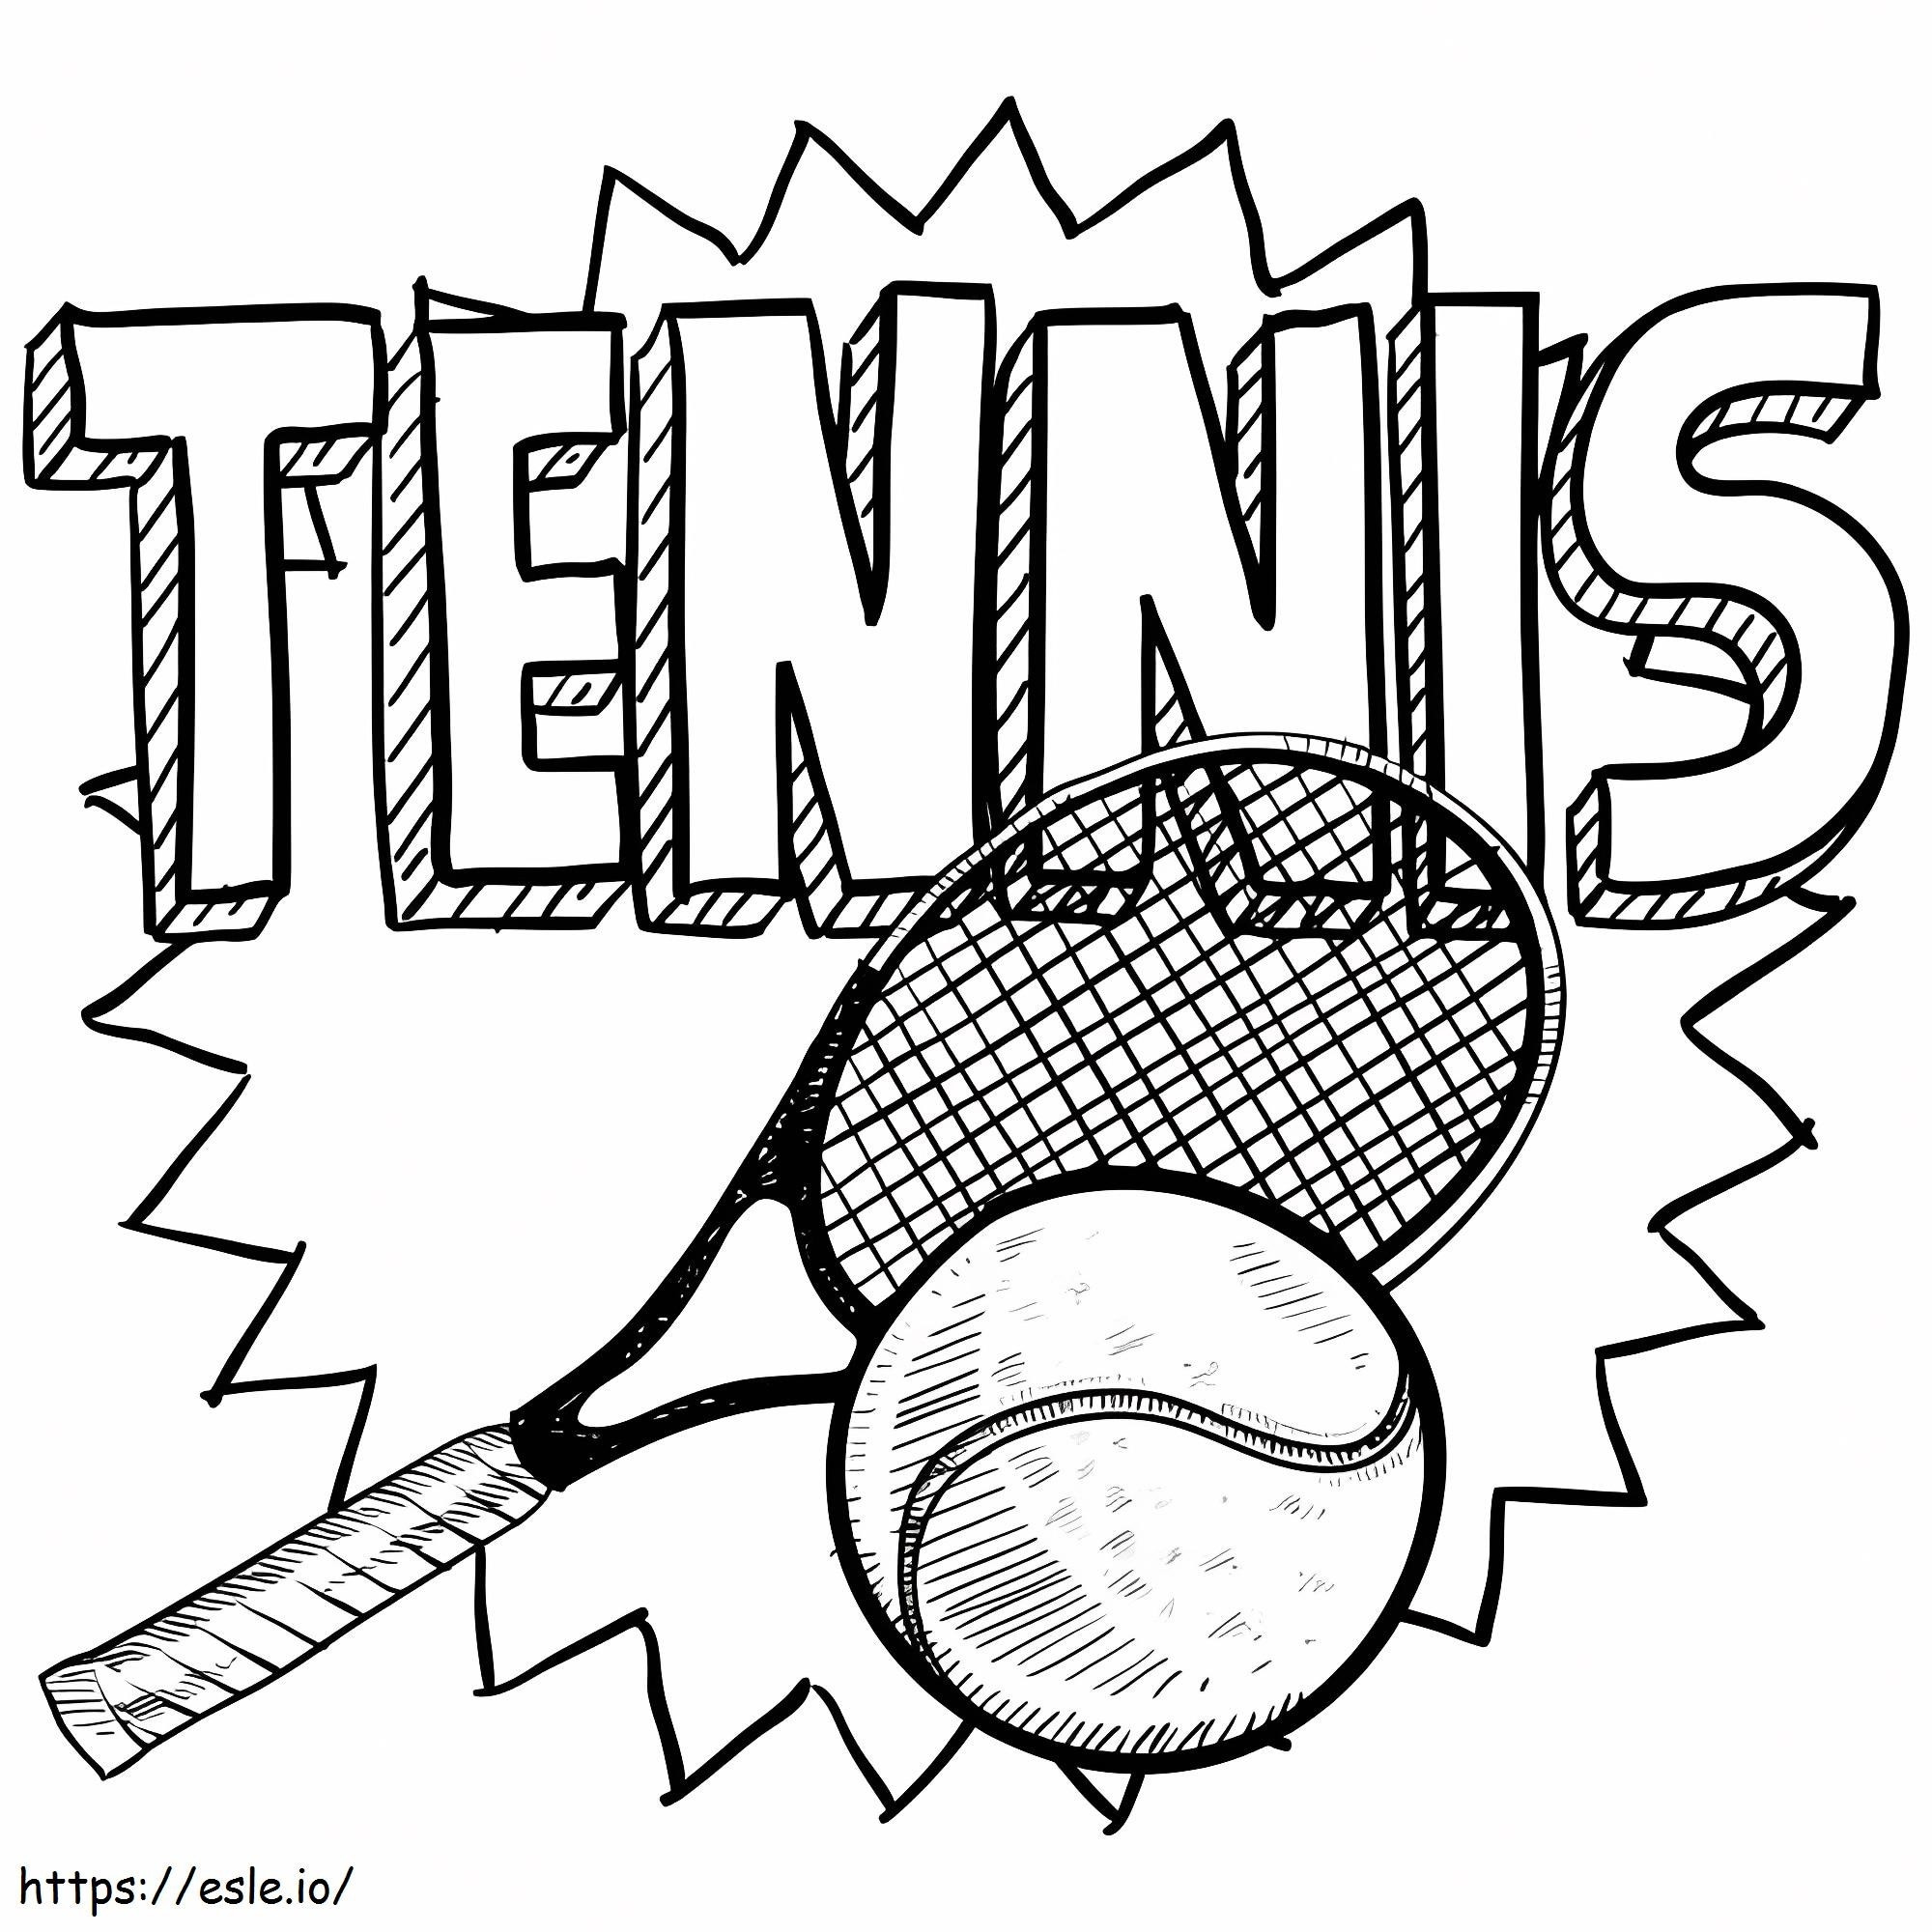 Tennis-Poster ausmalbilder